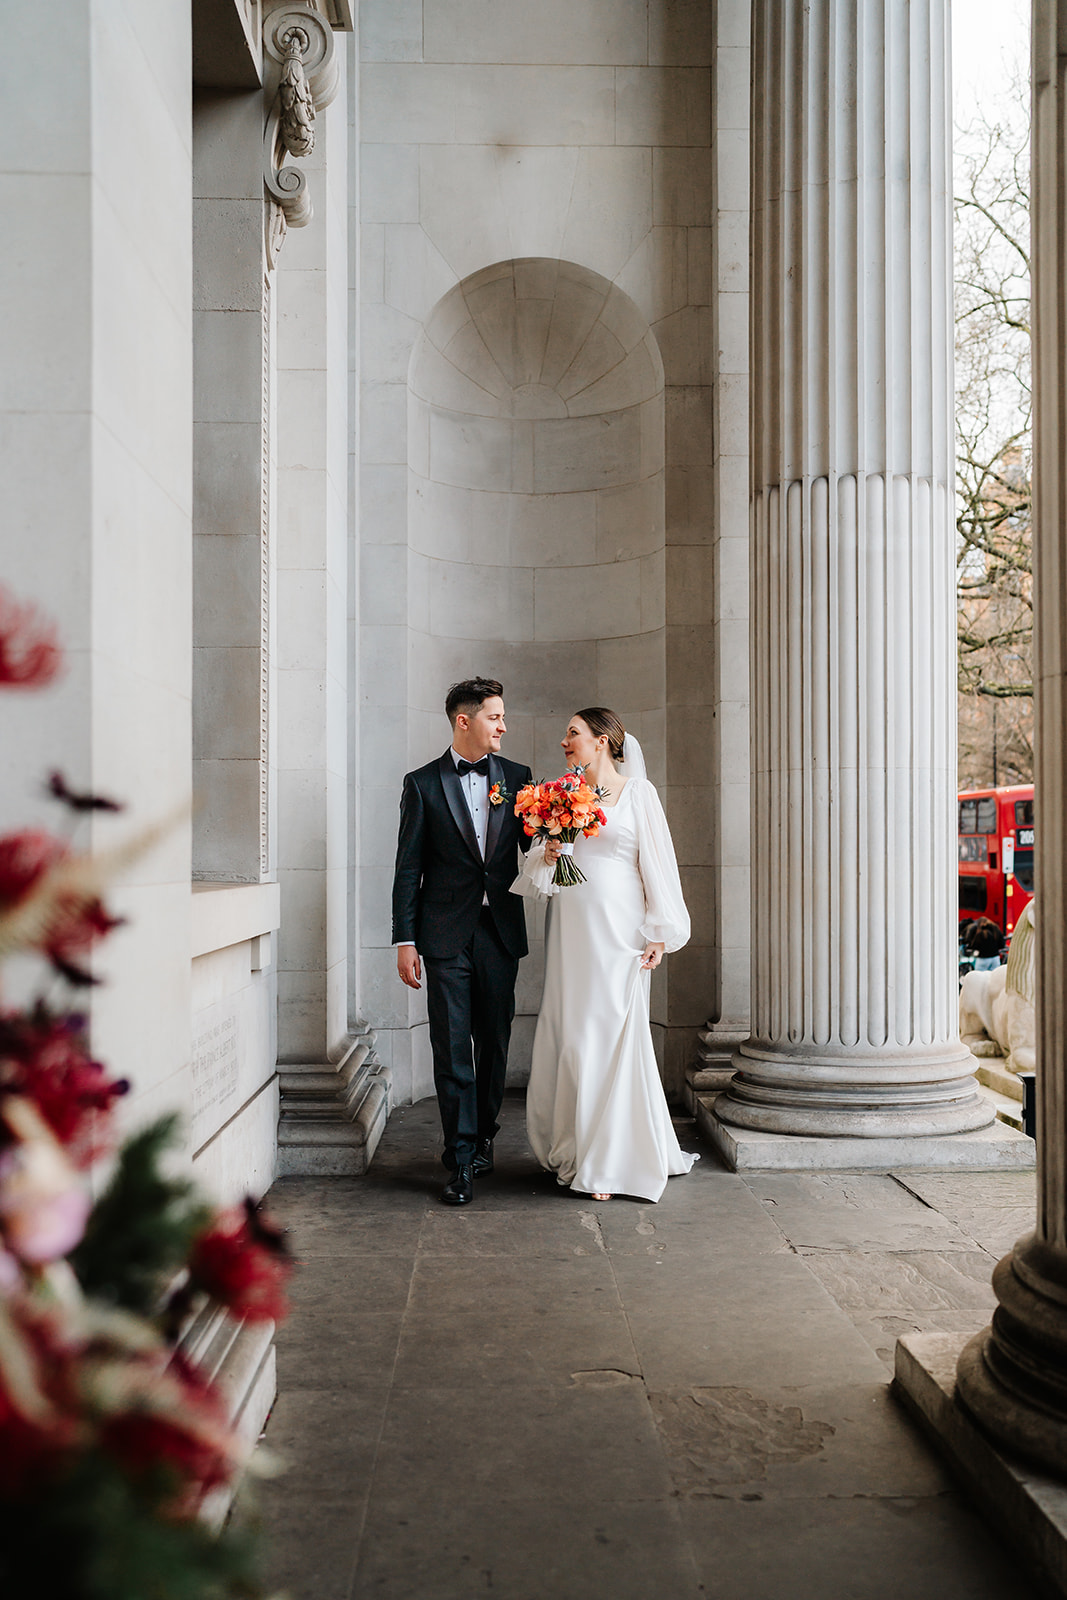 Fun Wedding Photography at Old Marylebone Town Hall | London Wedding Photographer